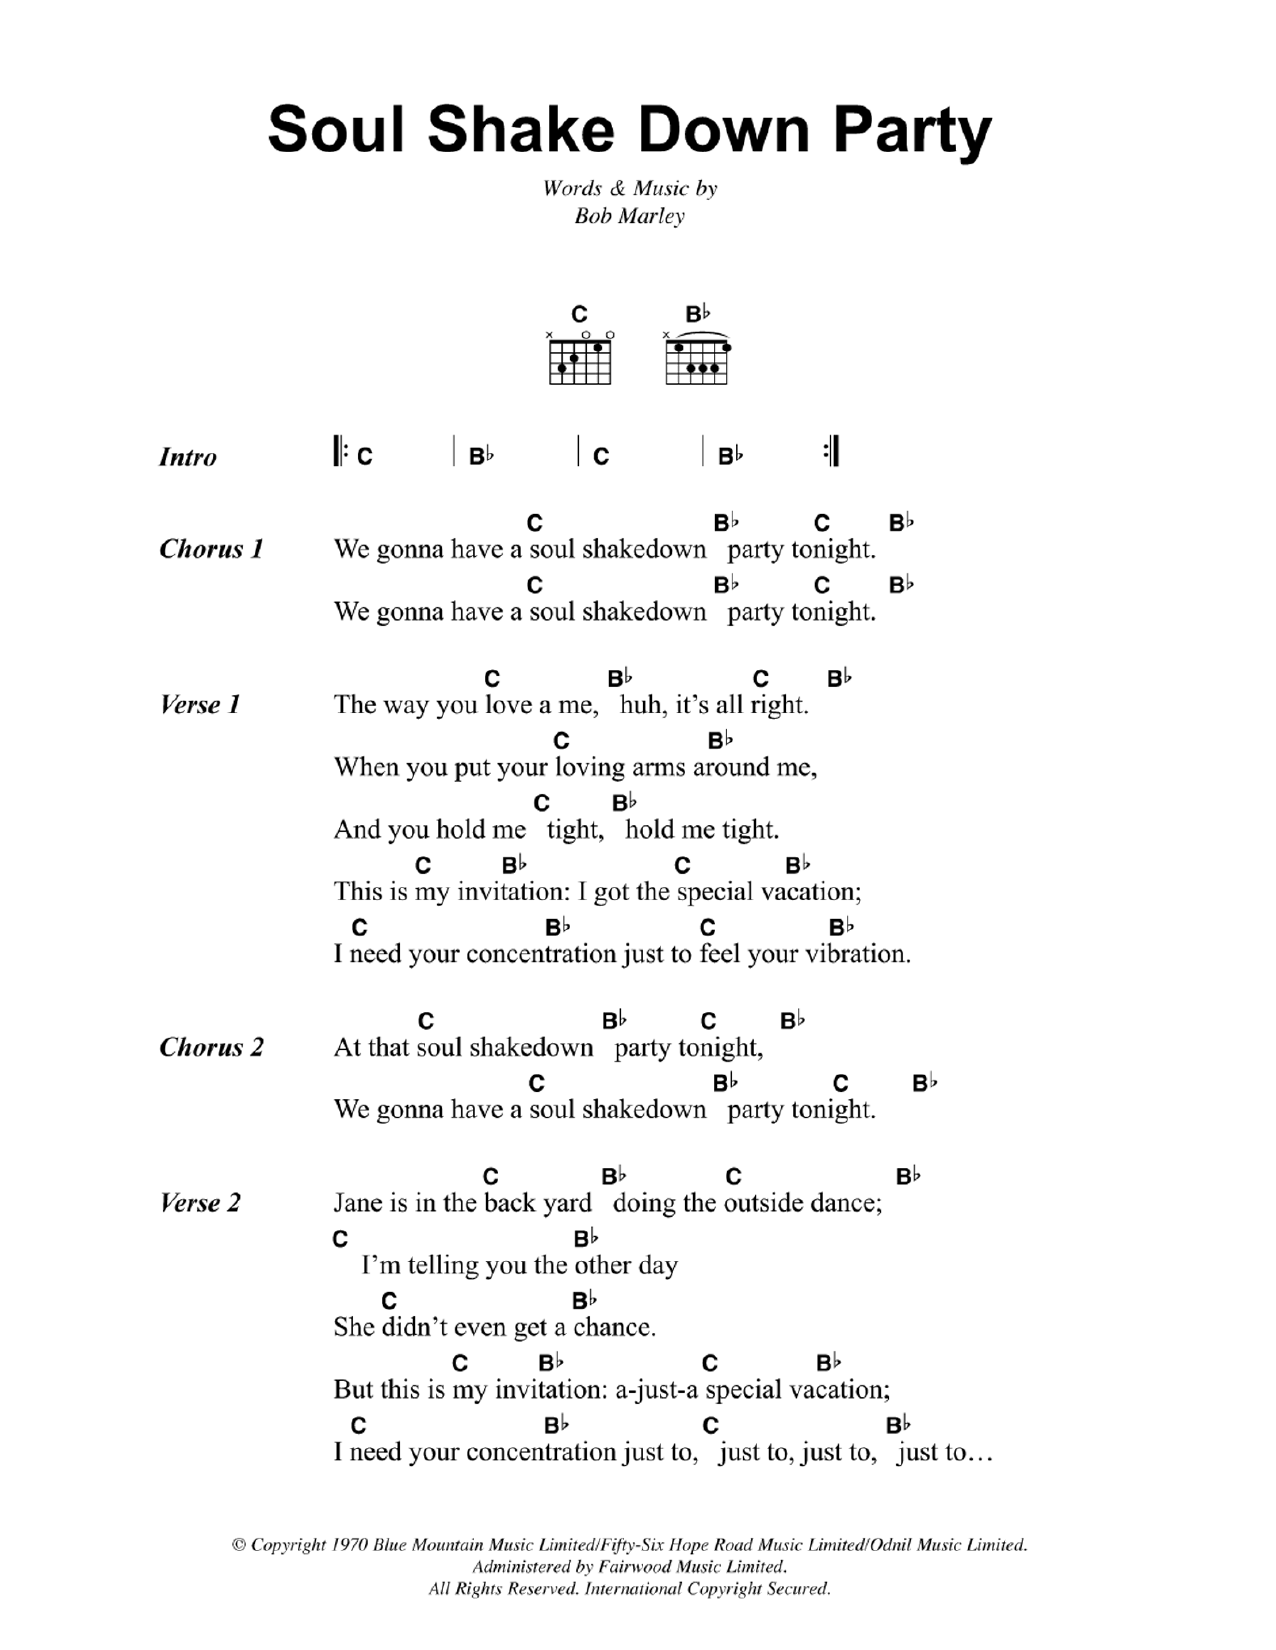 Bob Marley Soul Shakedown Party Sheet Music Notes & Chords for Lyrics & Chords - Download or Print PDF